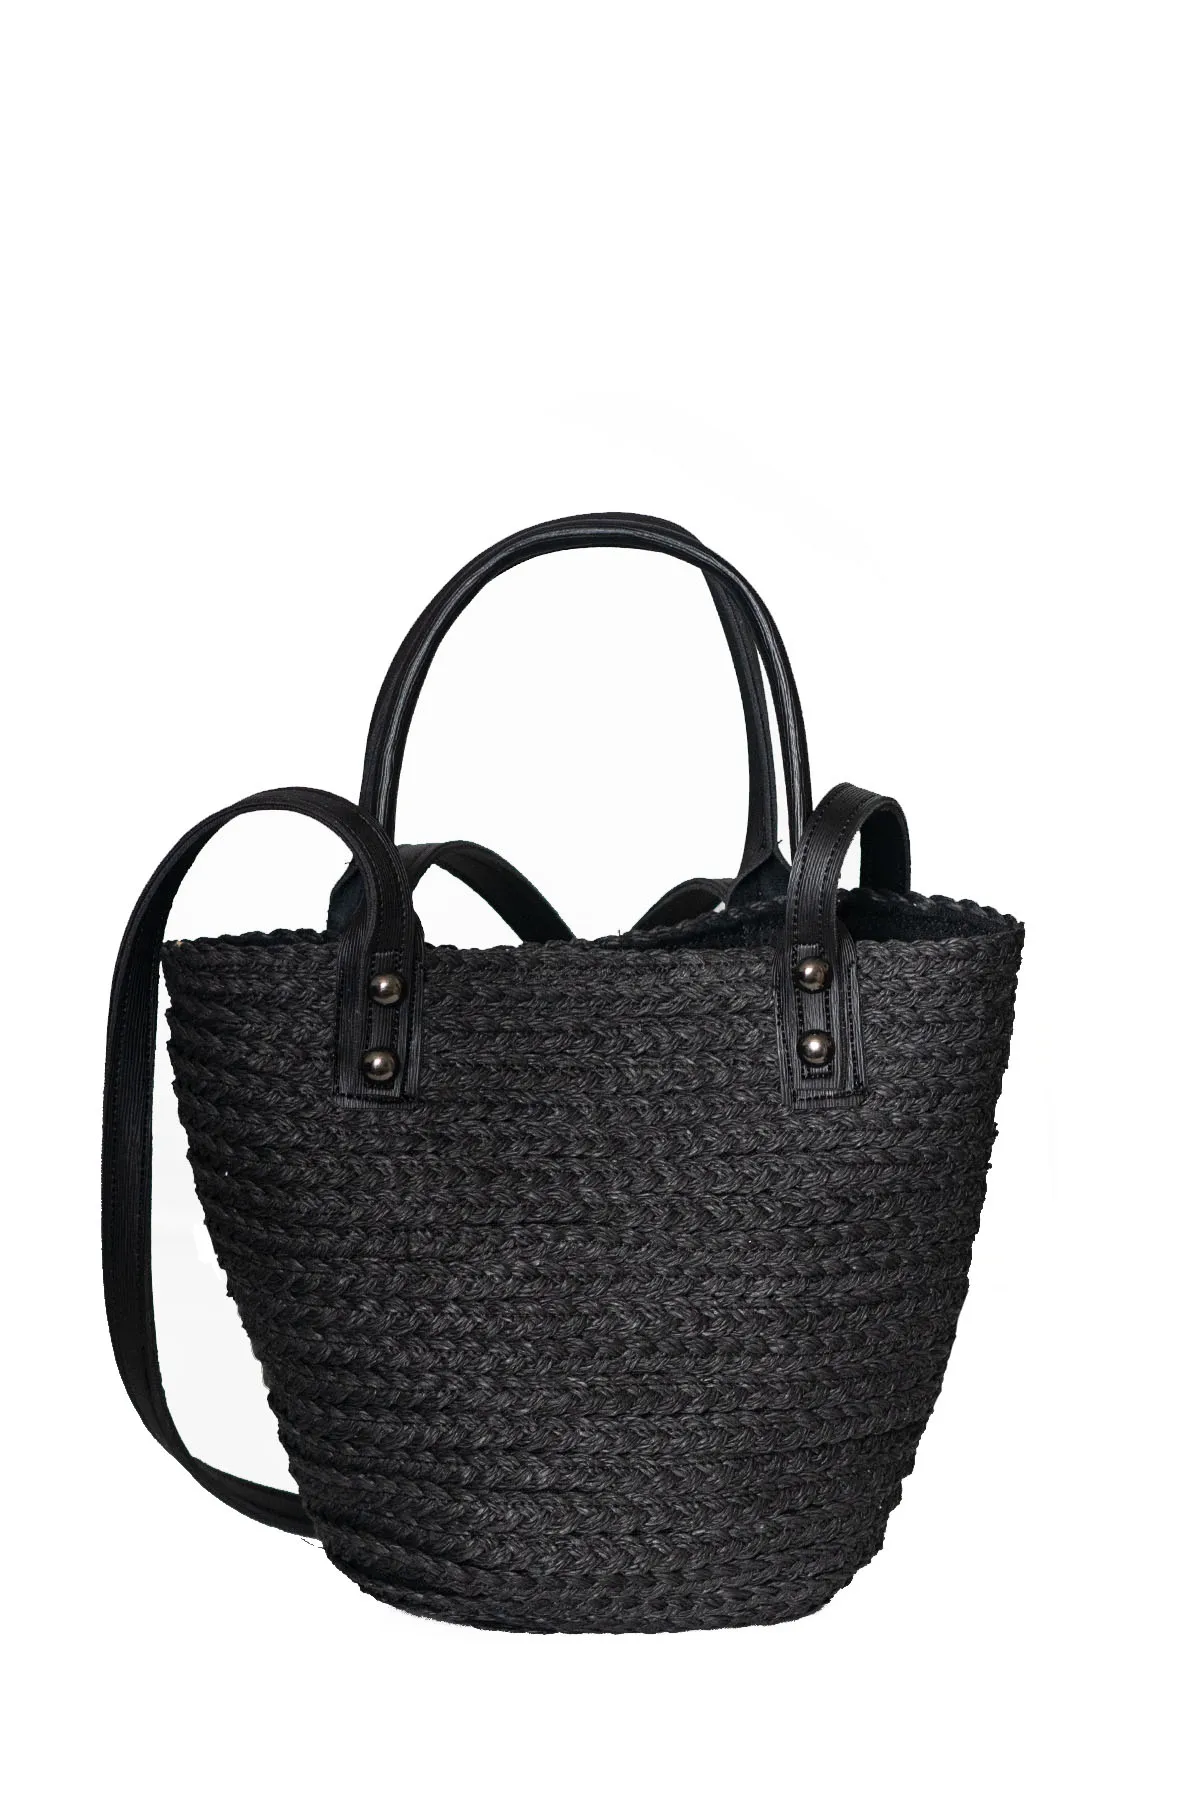 Women's Straw Double Strap Bag Canvas Bag Double Strap Shoulder Bag Handmade Basket bags for women beach bucket bag 2021